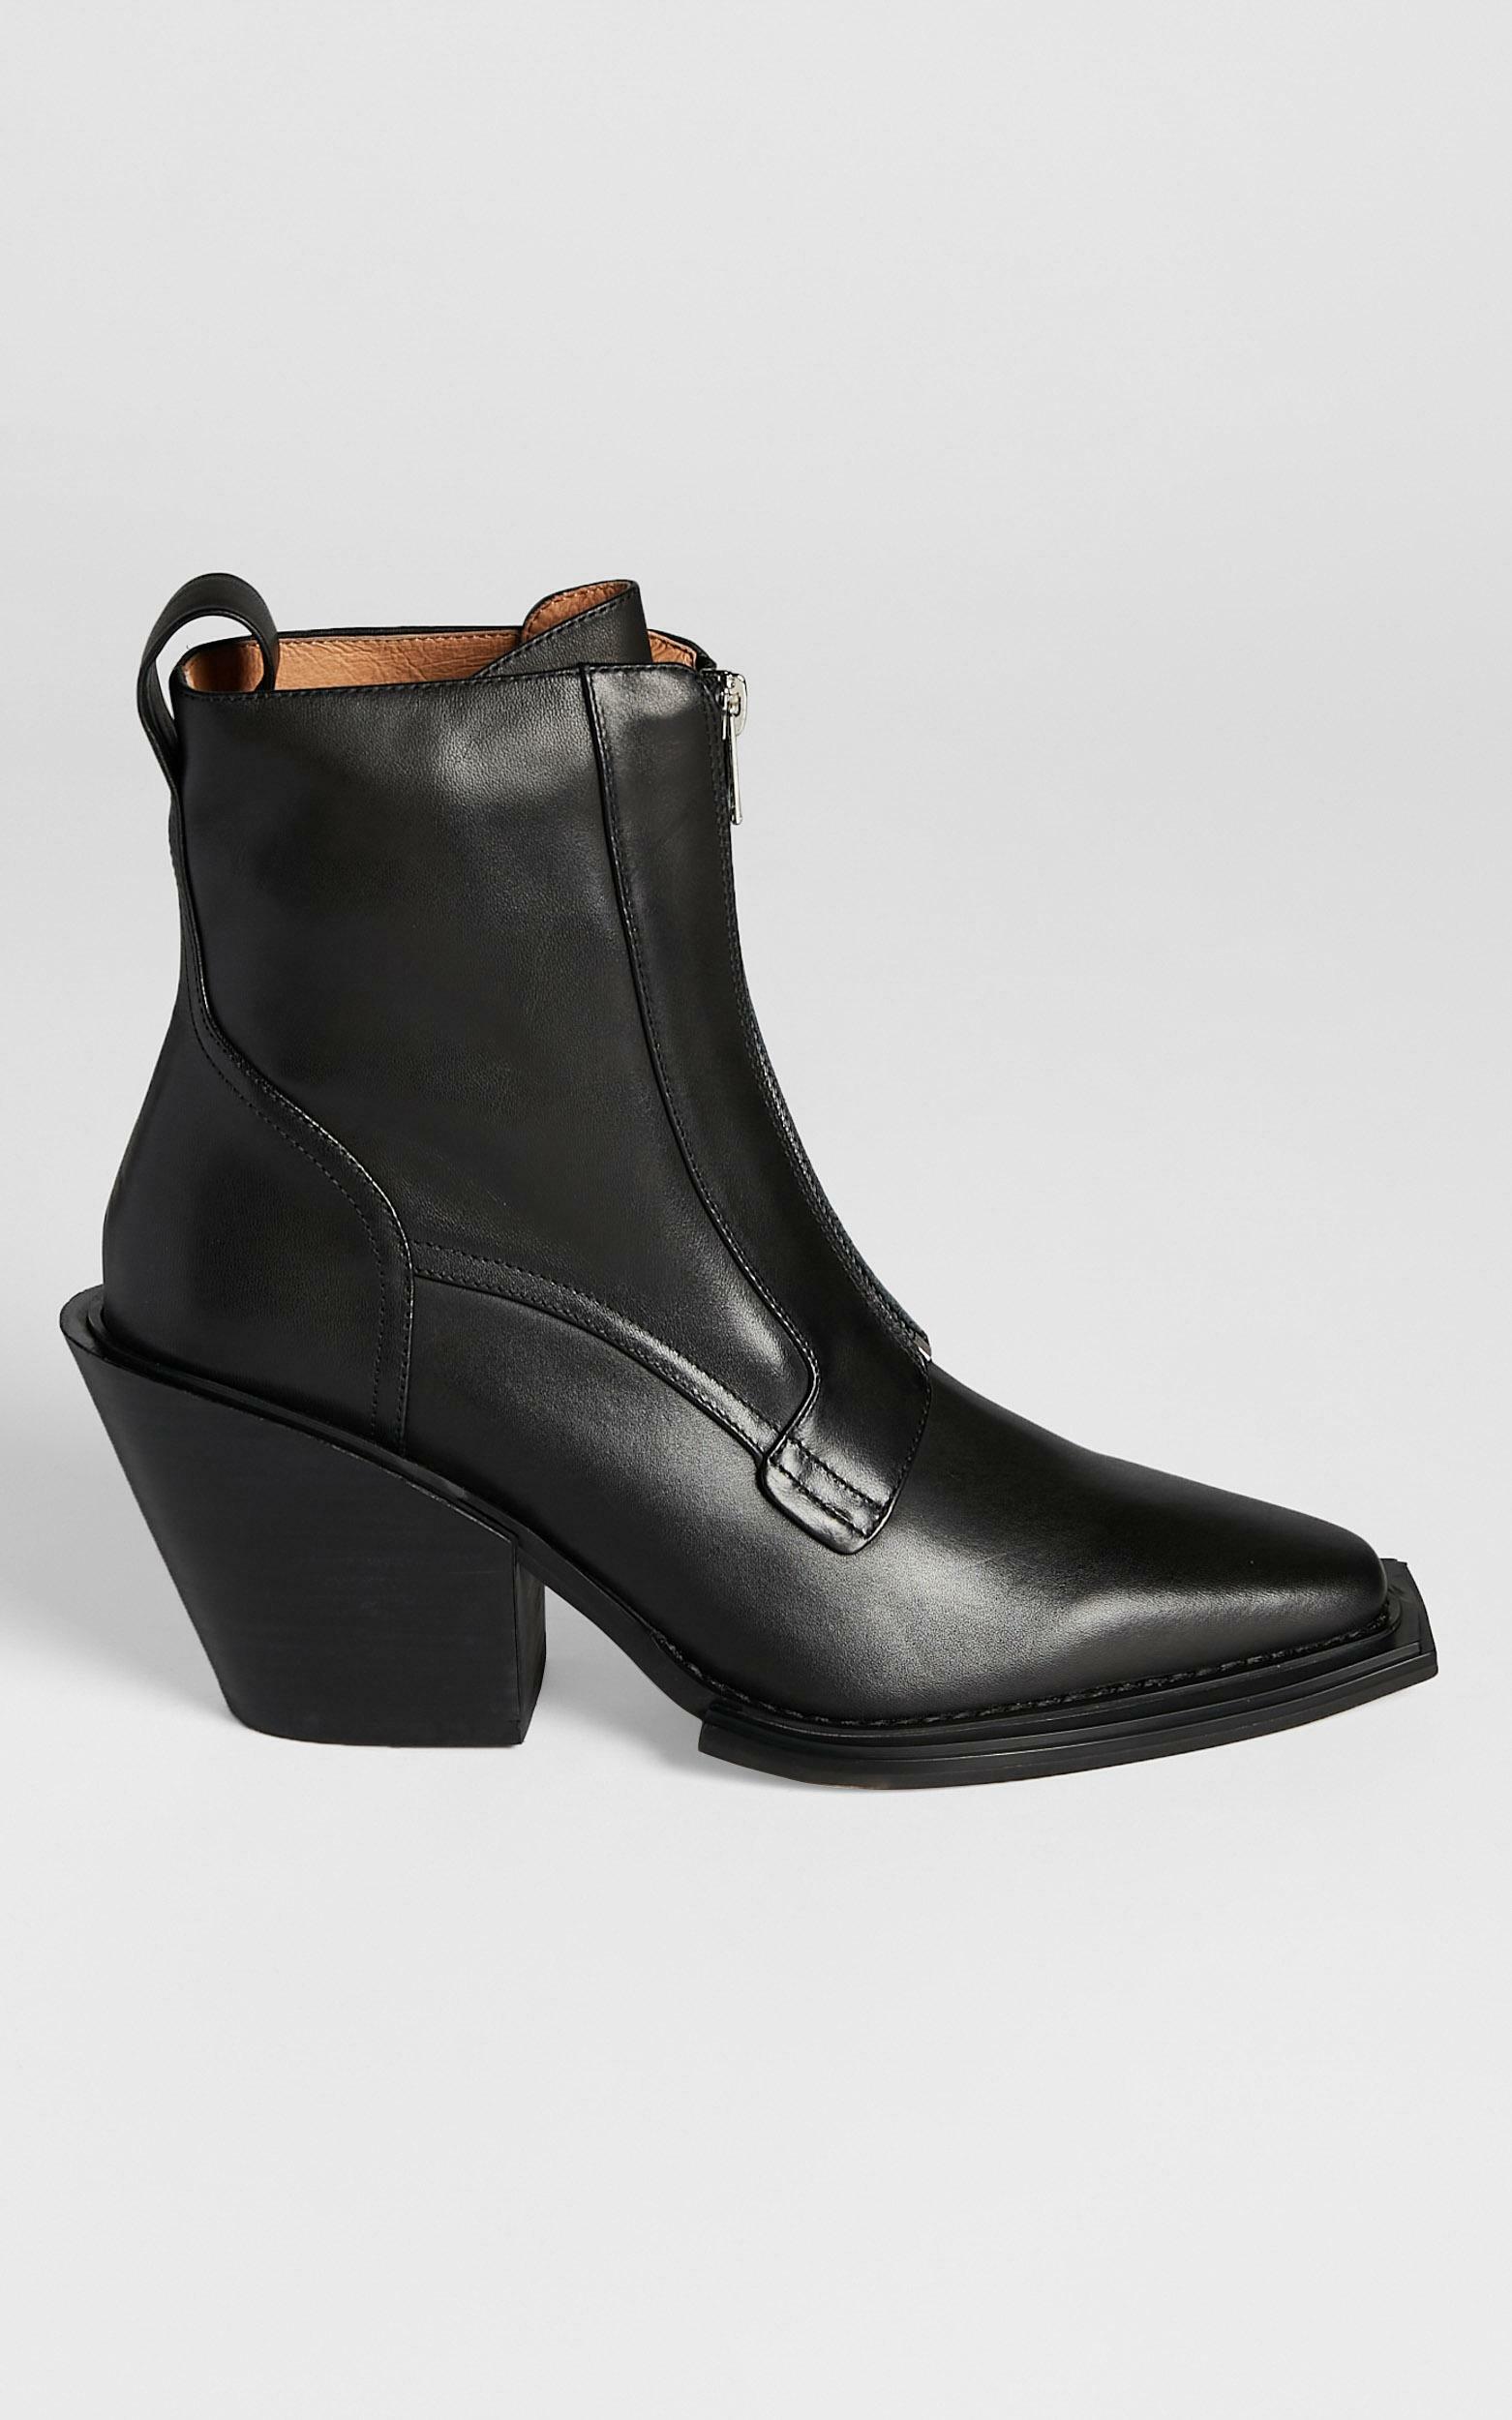 Alias Mae - Jordan Boots in Black 